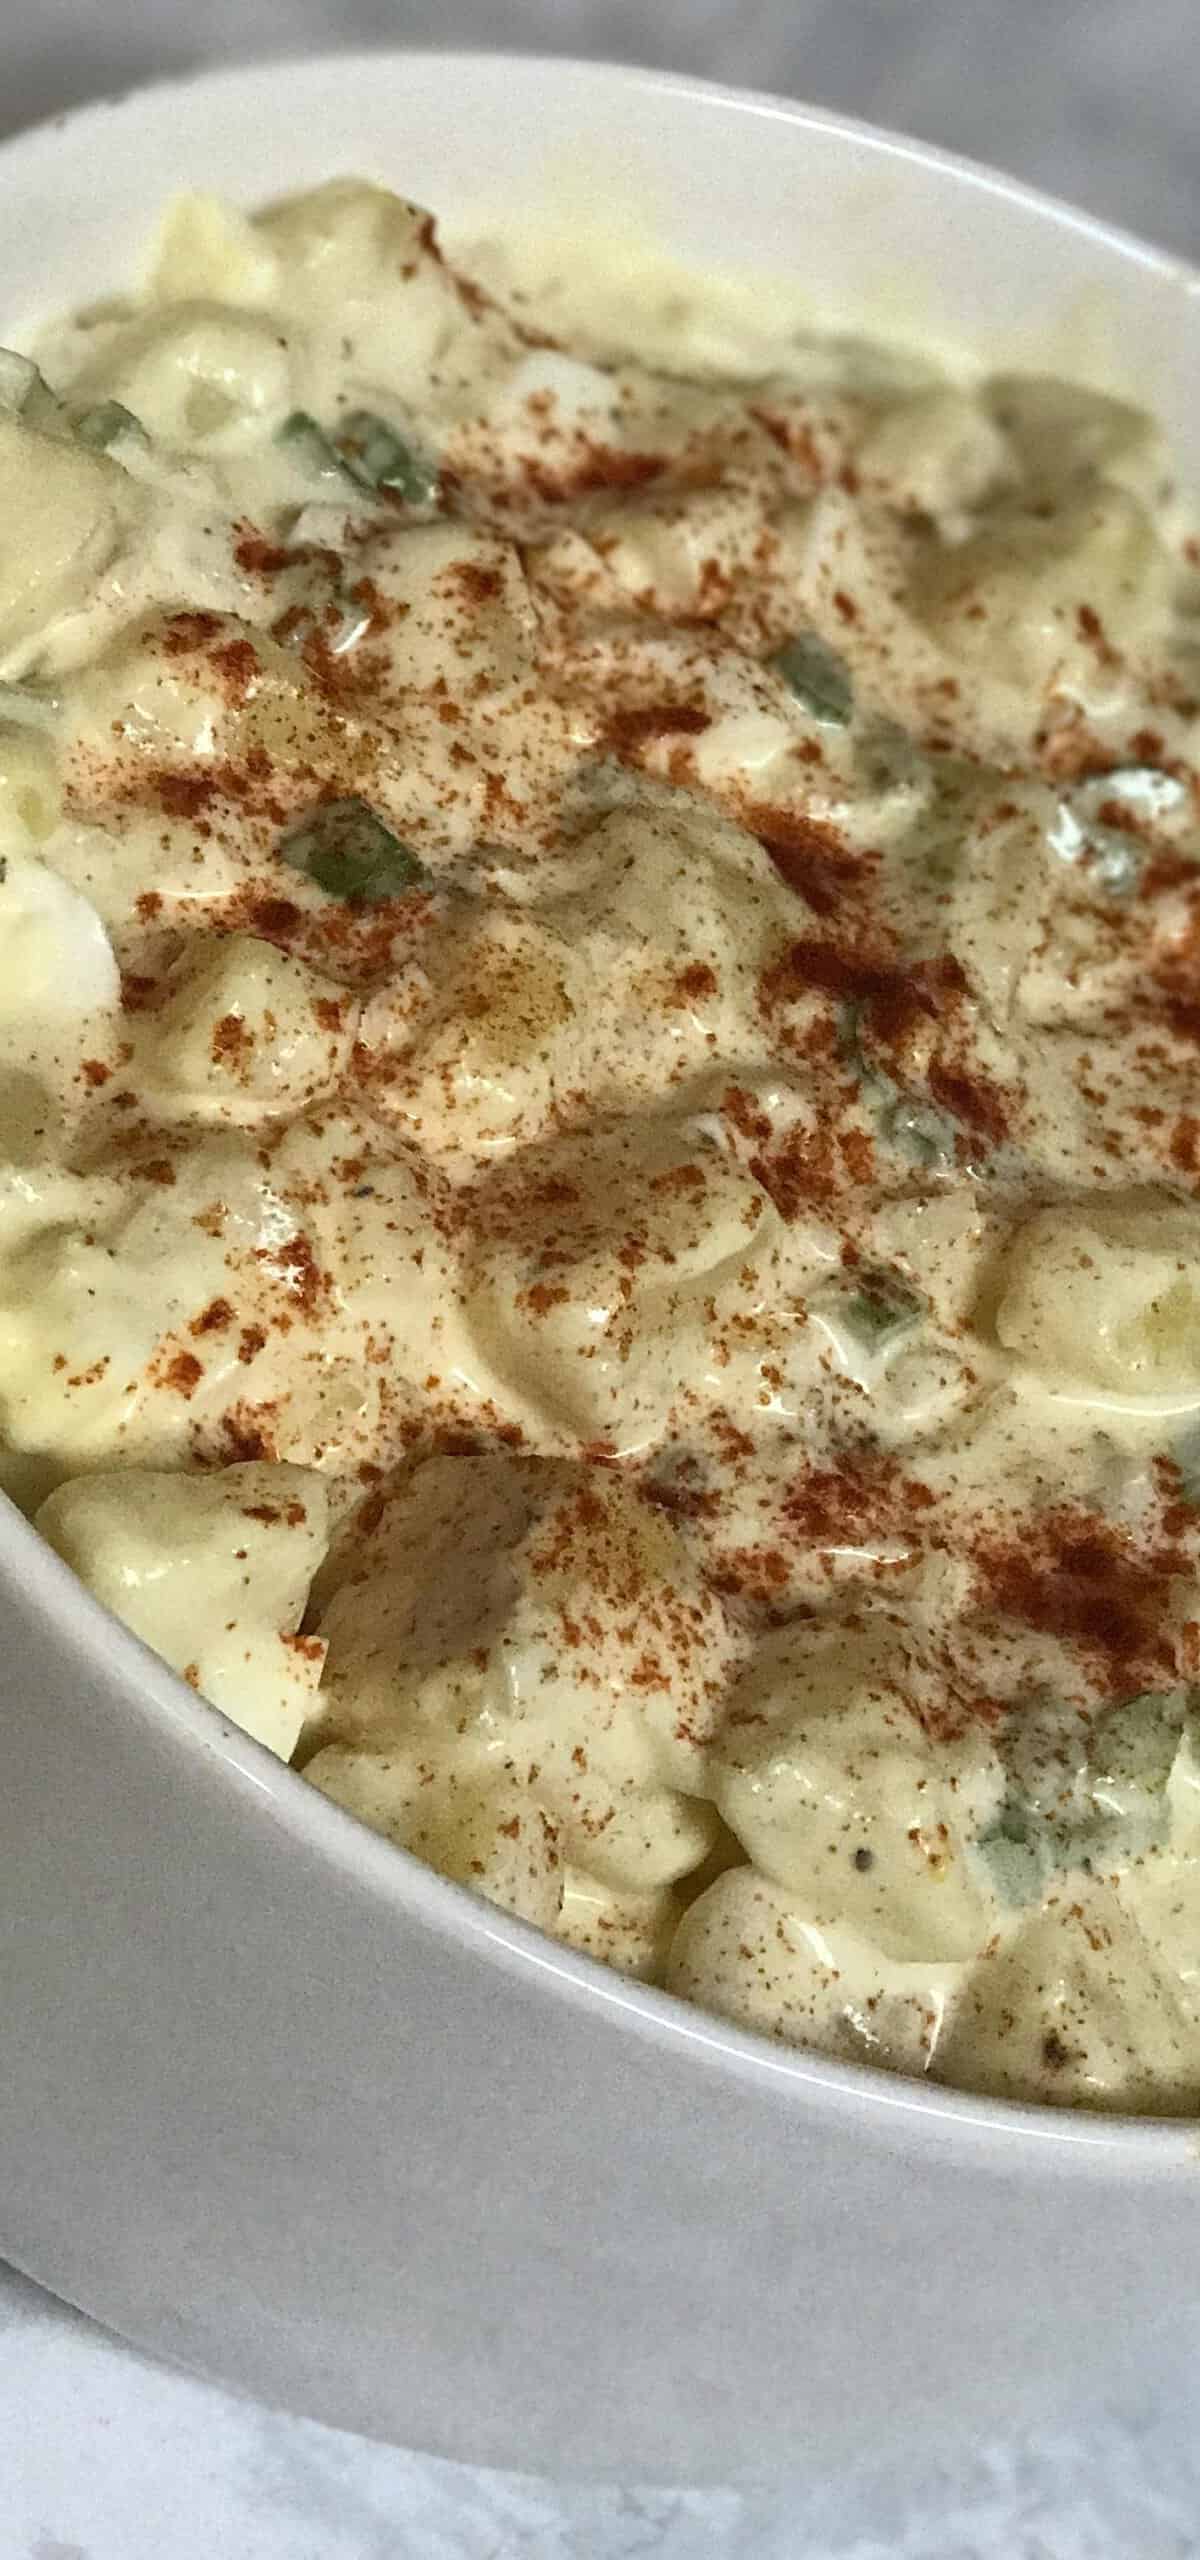  Creamy, dreamy potato goodness in every bite